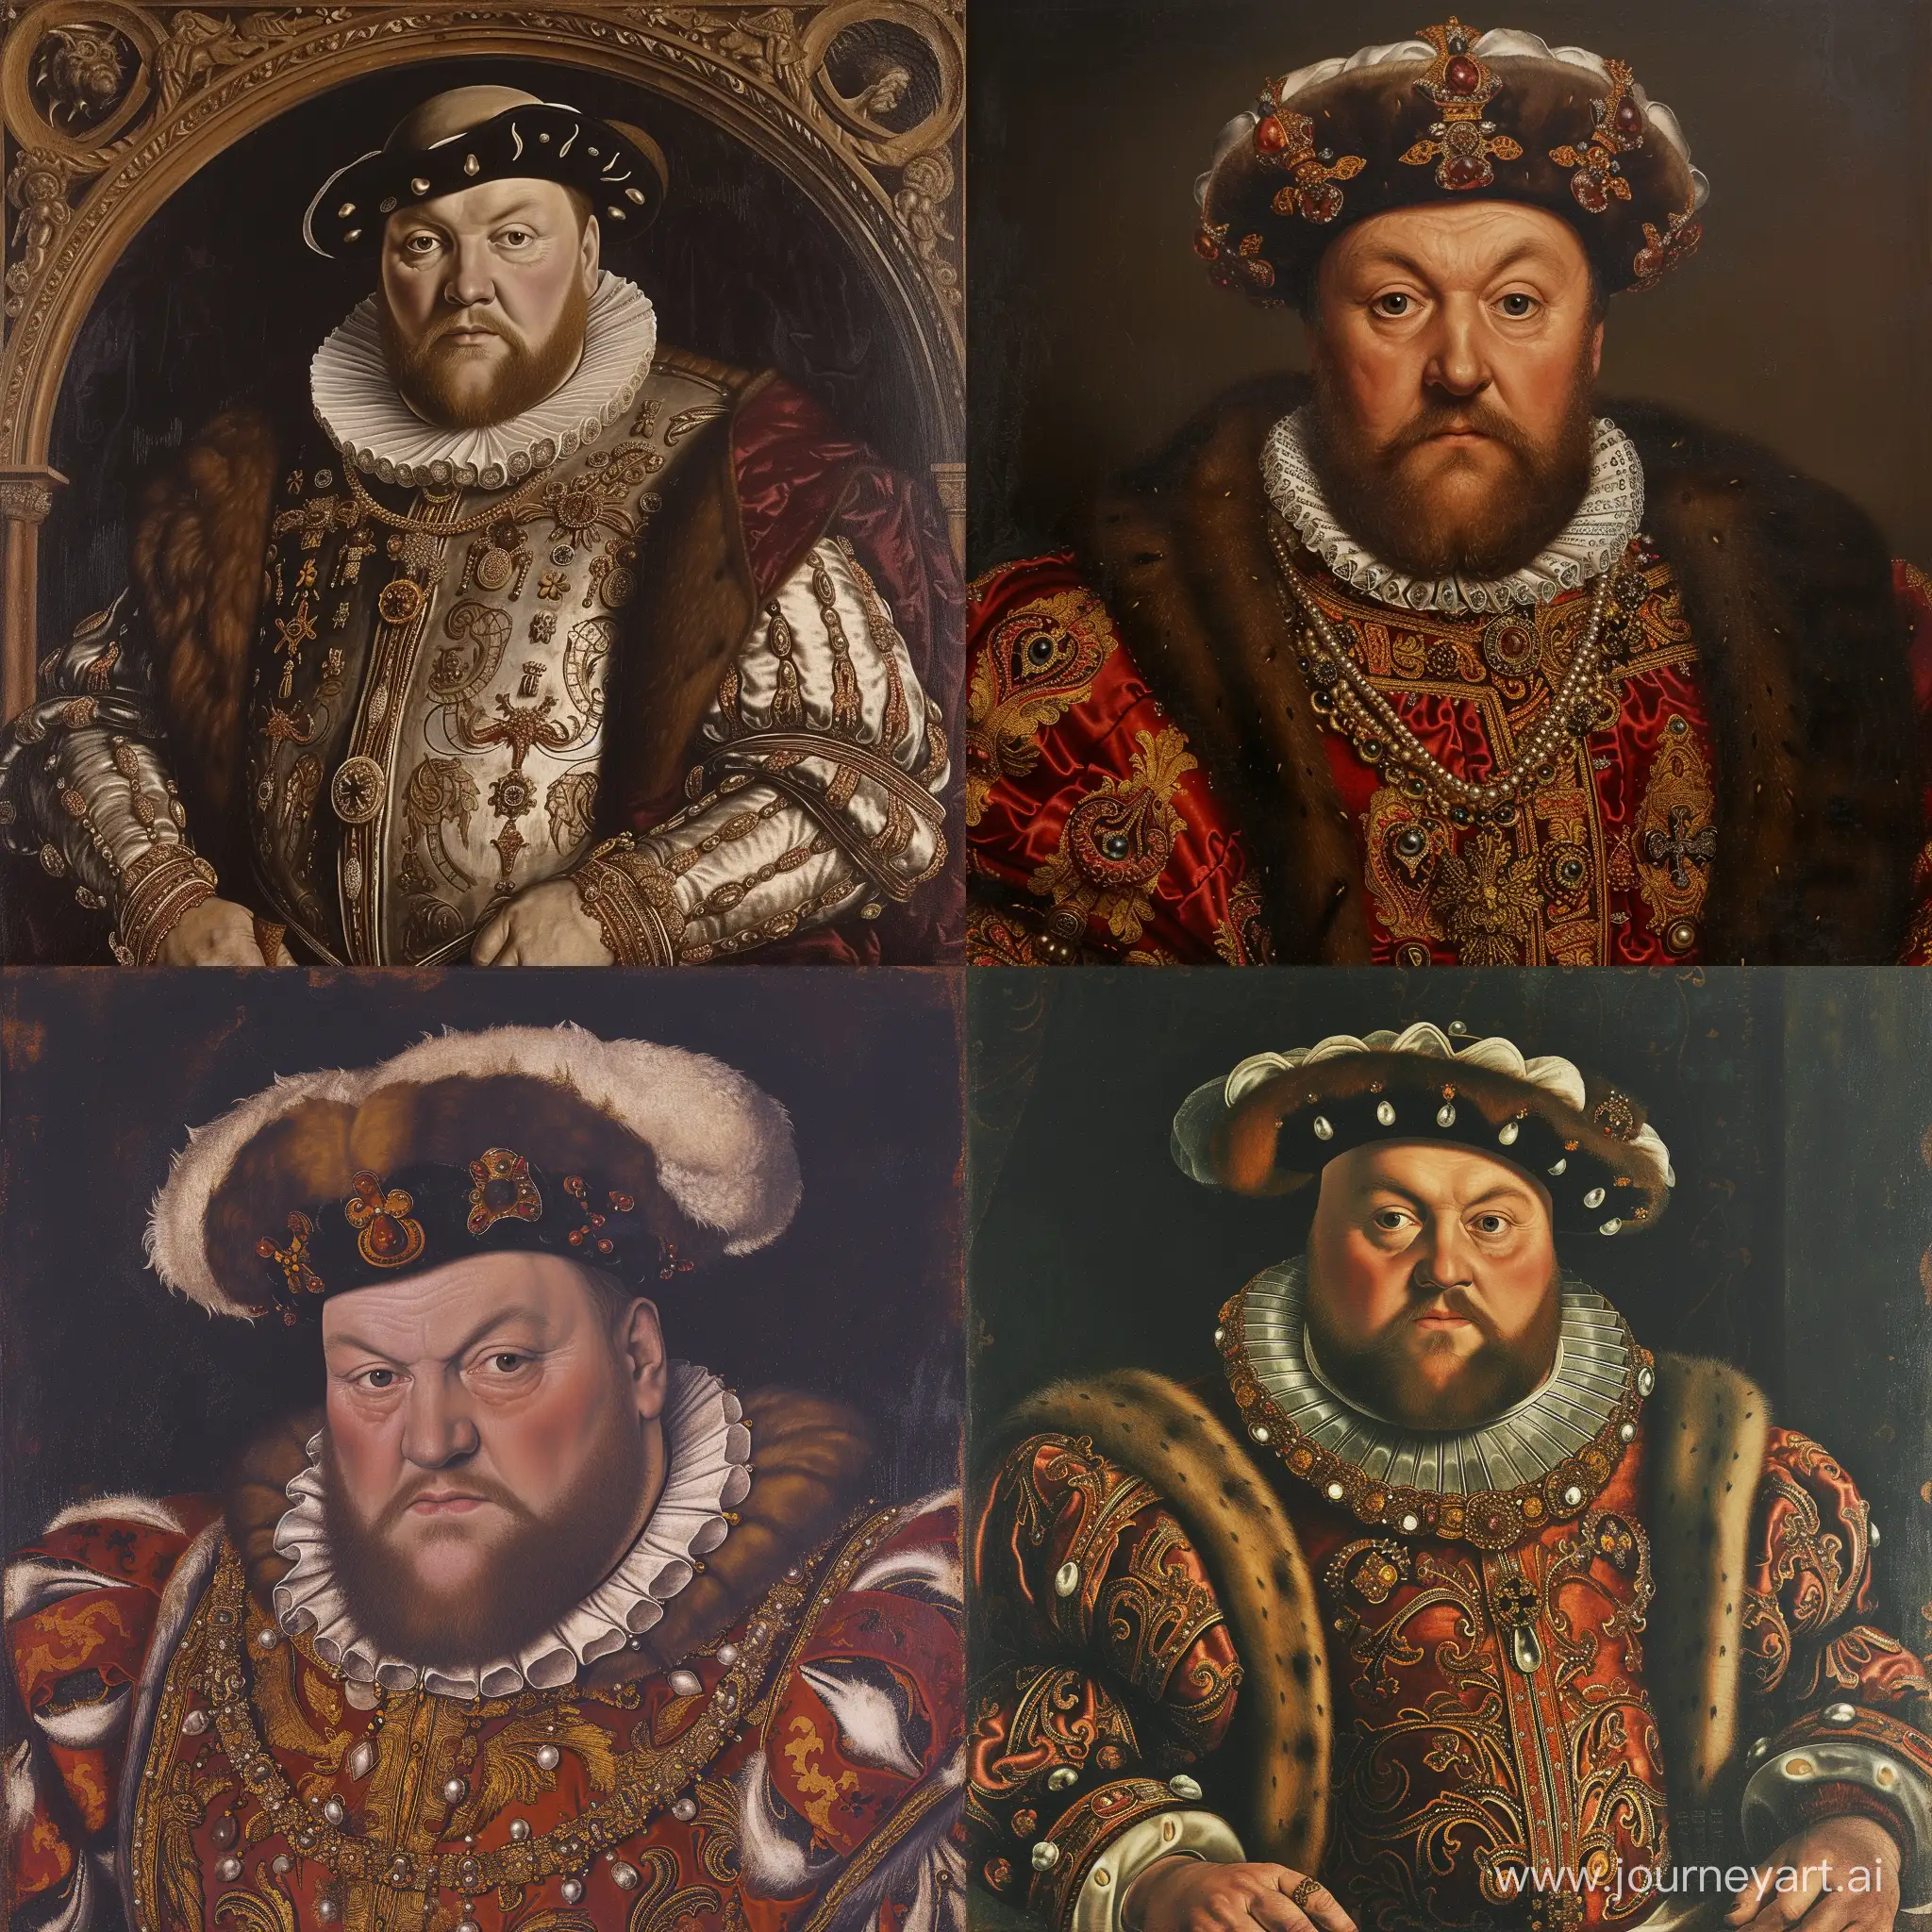 Royal-Portrait-of-King-Henry-VIII-in-Exquisite-Regalia